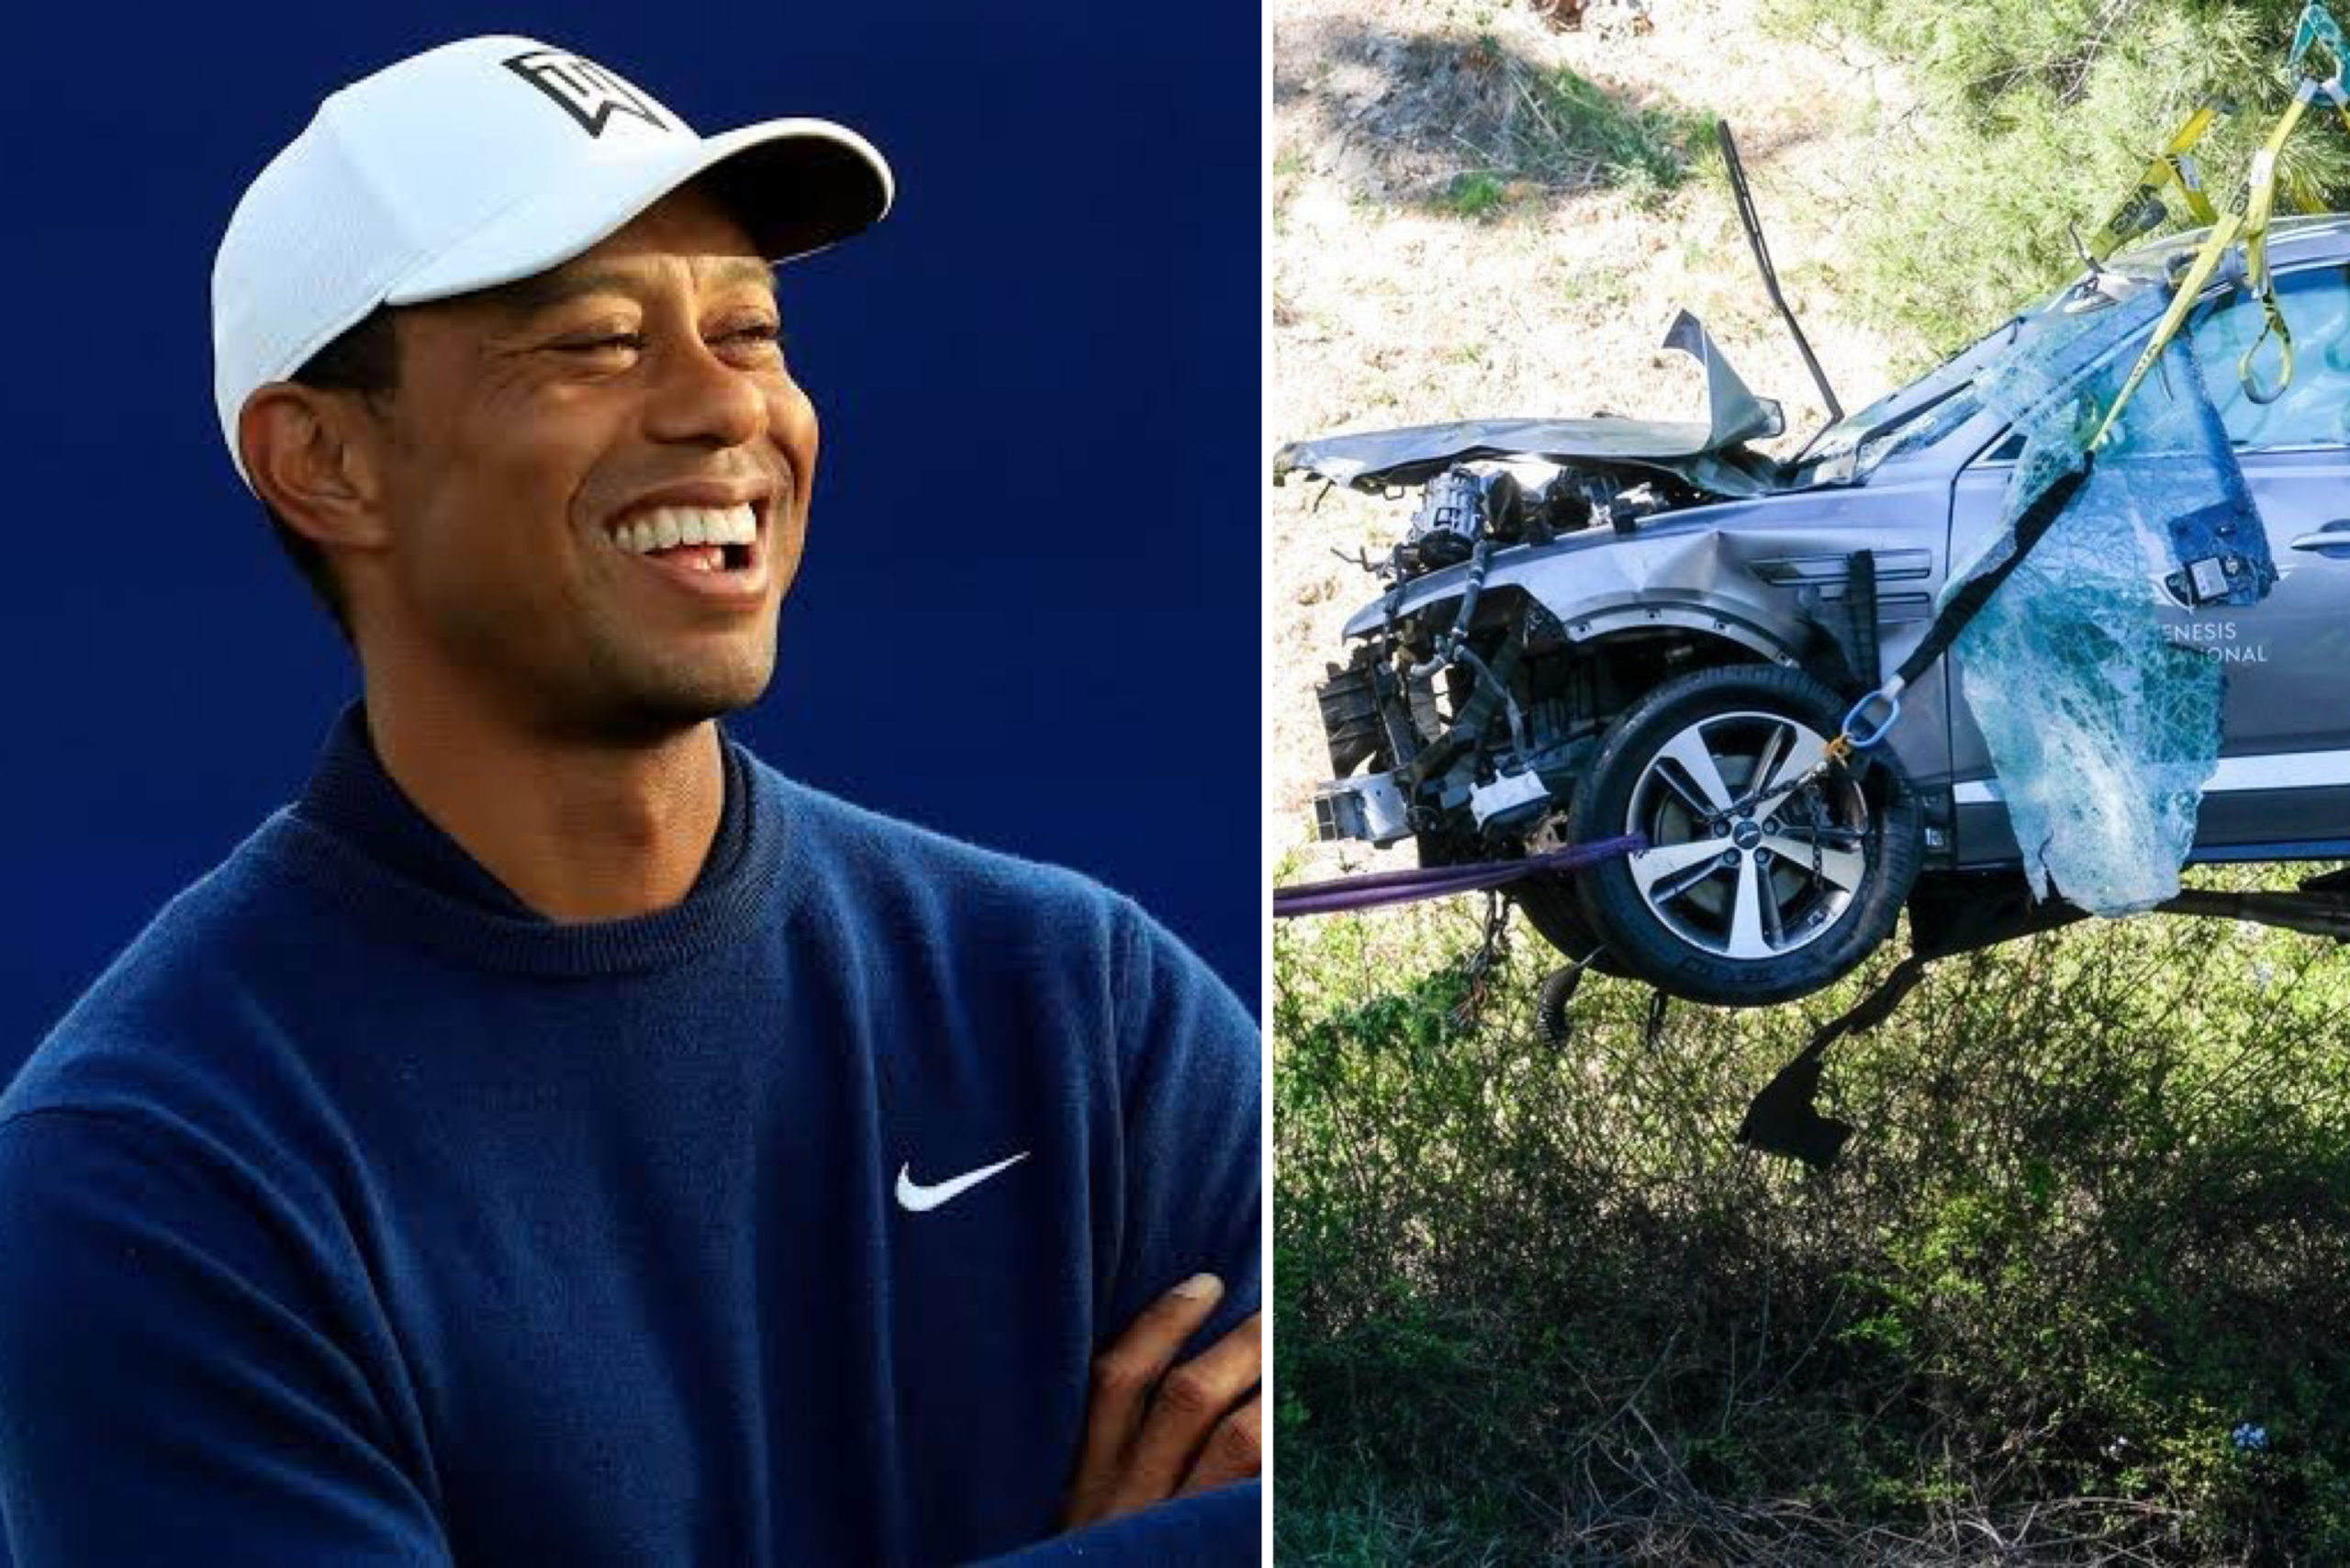 'I Am So Grateful' - Tiger Woods Says As He Returns Home From Hospital After Horror Car Crash